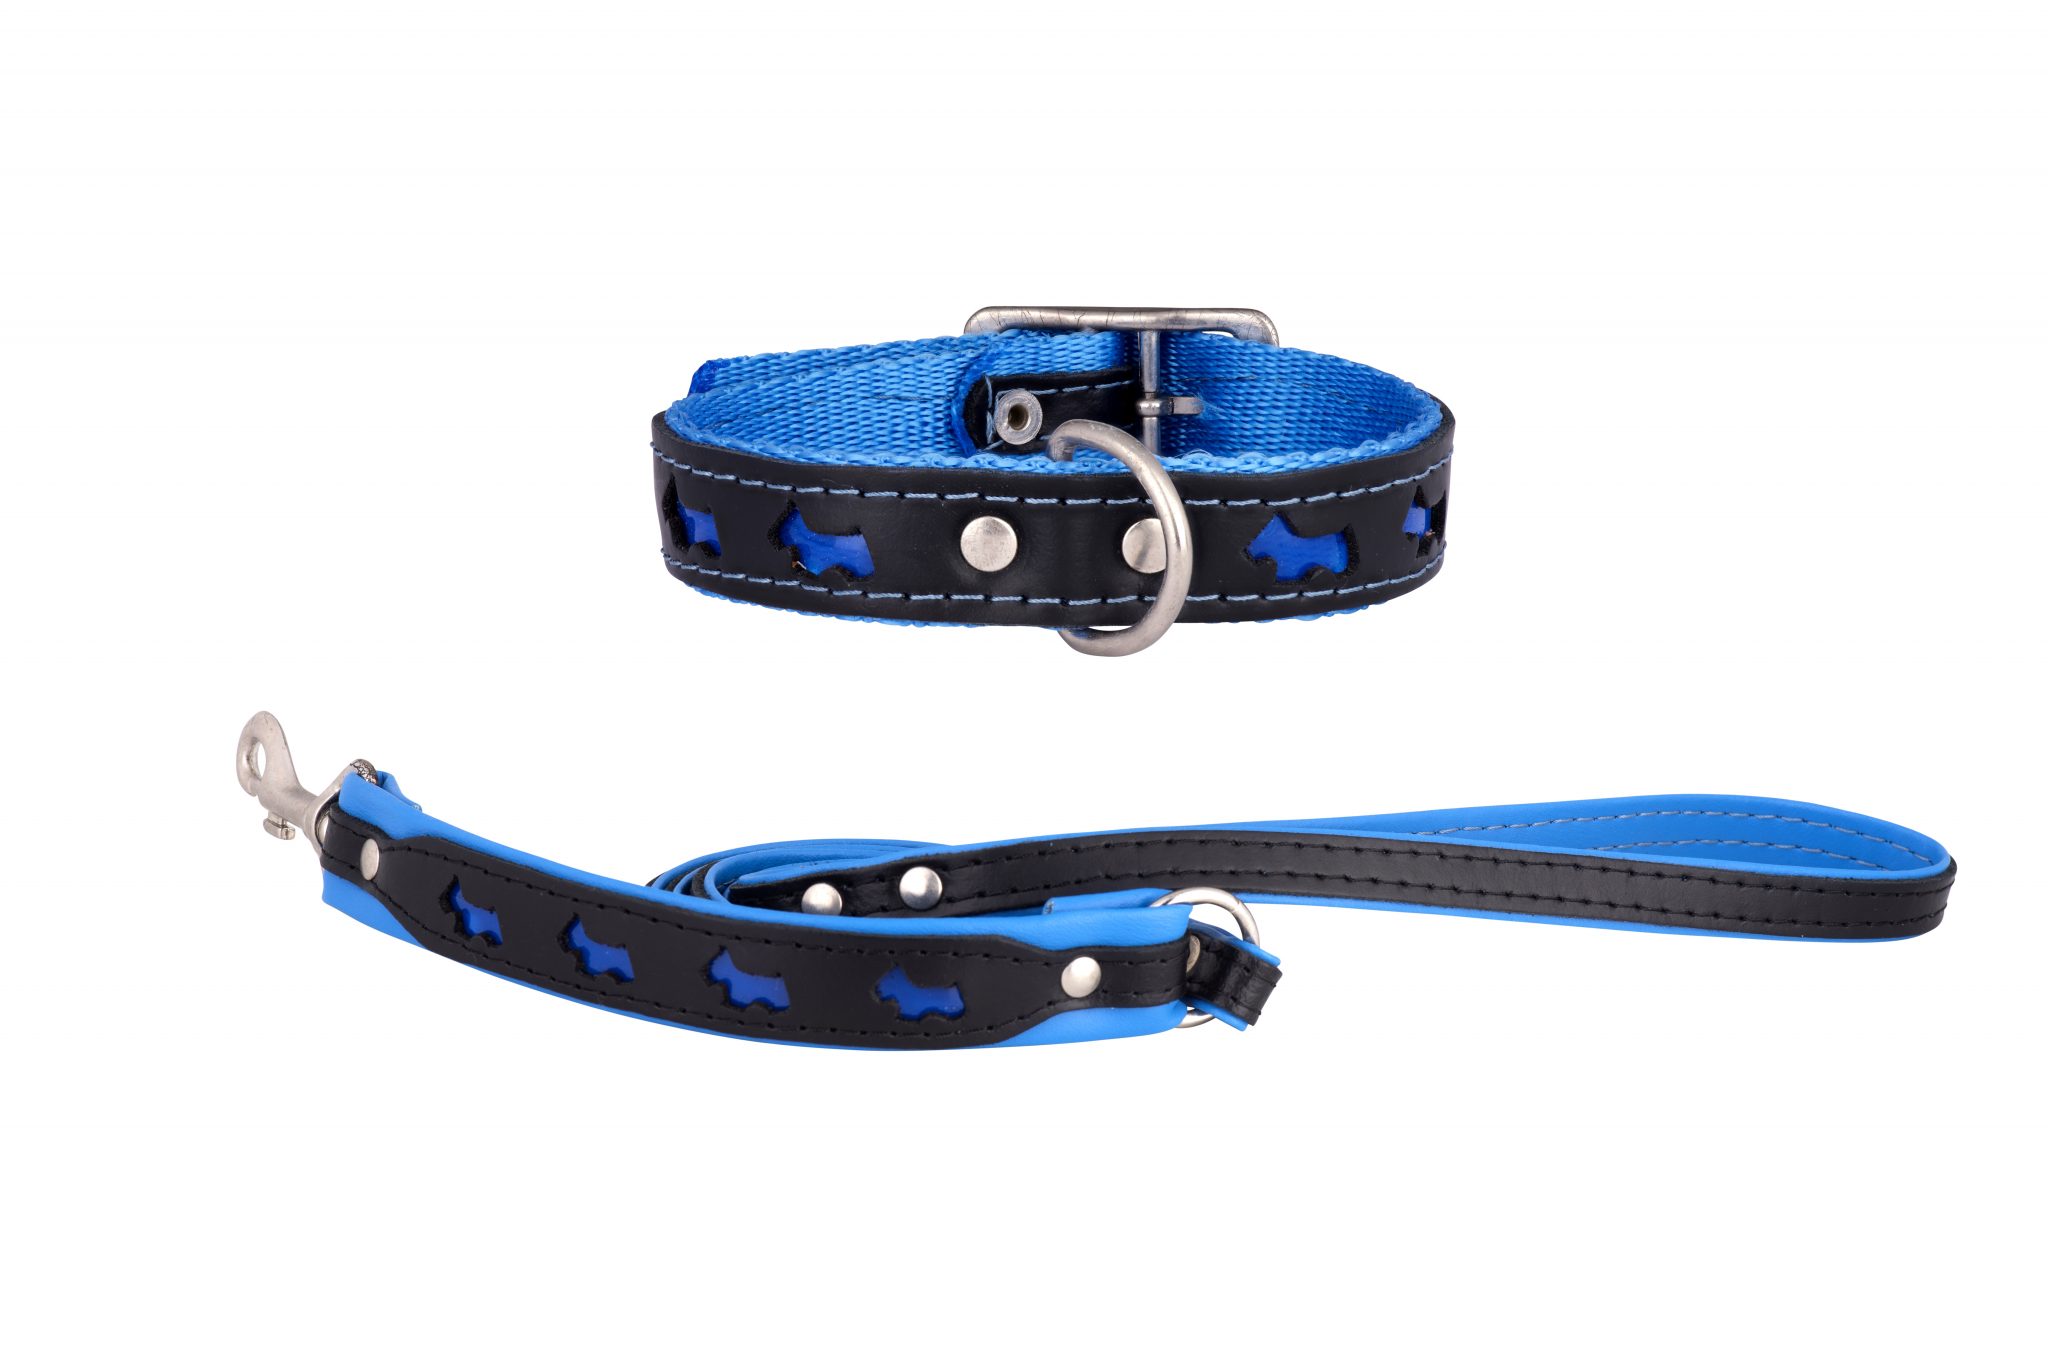 REFLEX Leather Designer Dog Collar and Lead in Blue by in Designer Dog Collars and Leads